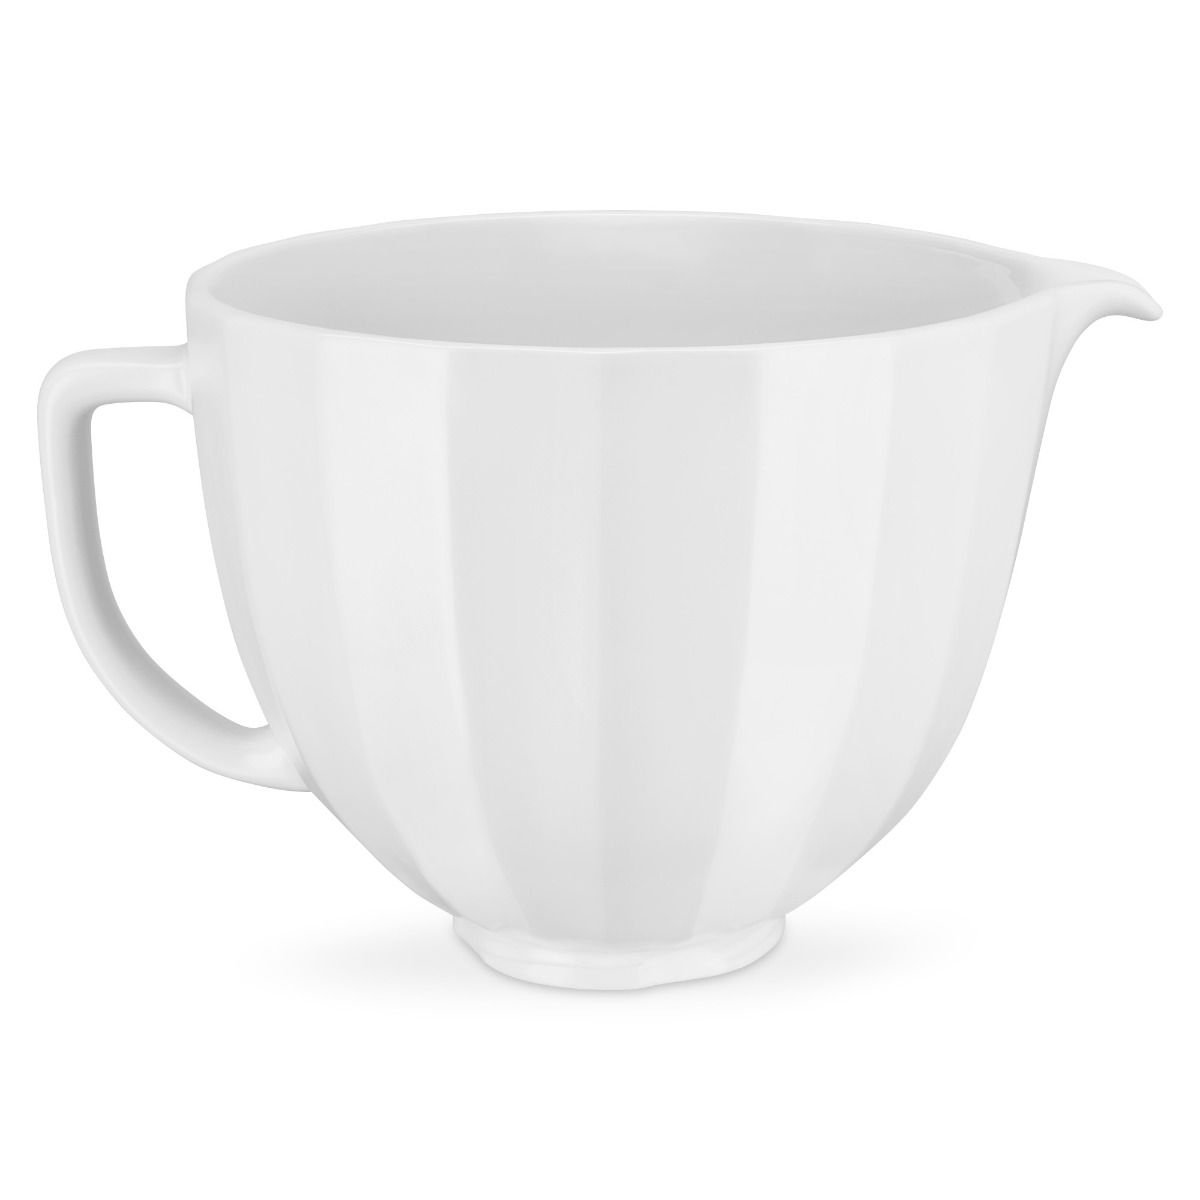 5-Quart White Gardenia Ceramic Bowl + Flex Edge Beater for 4.5